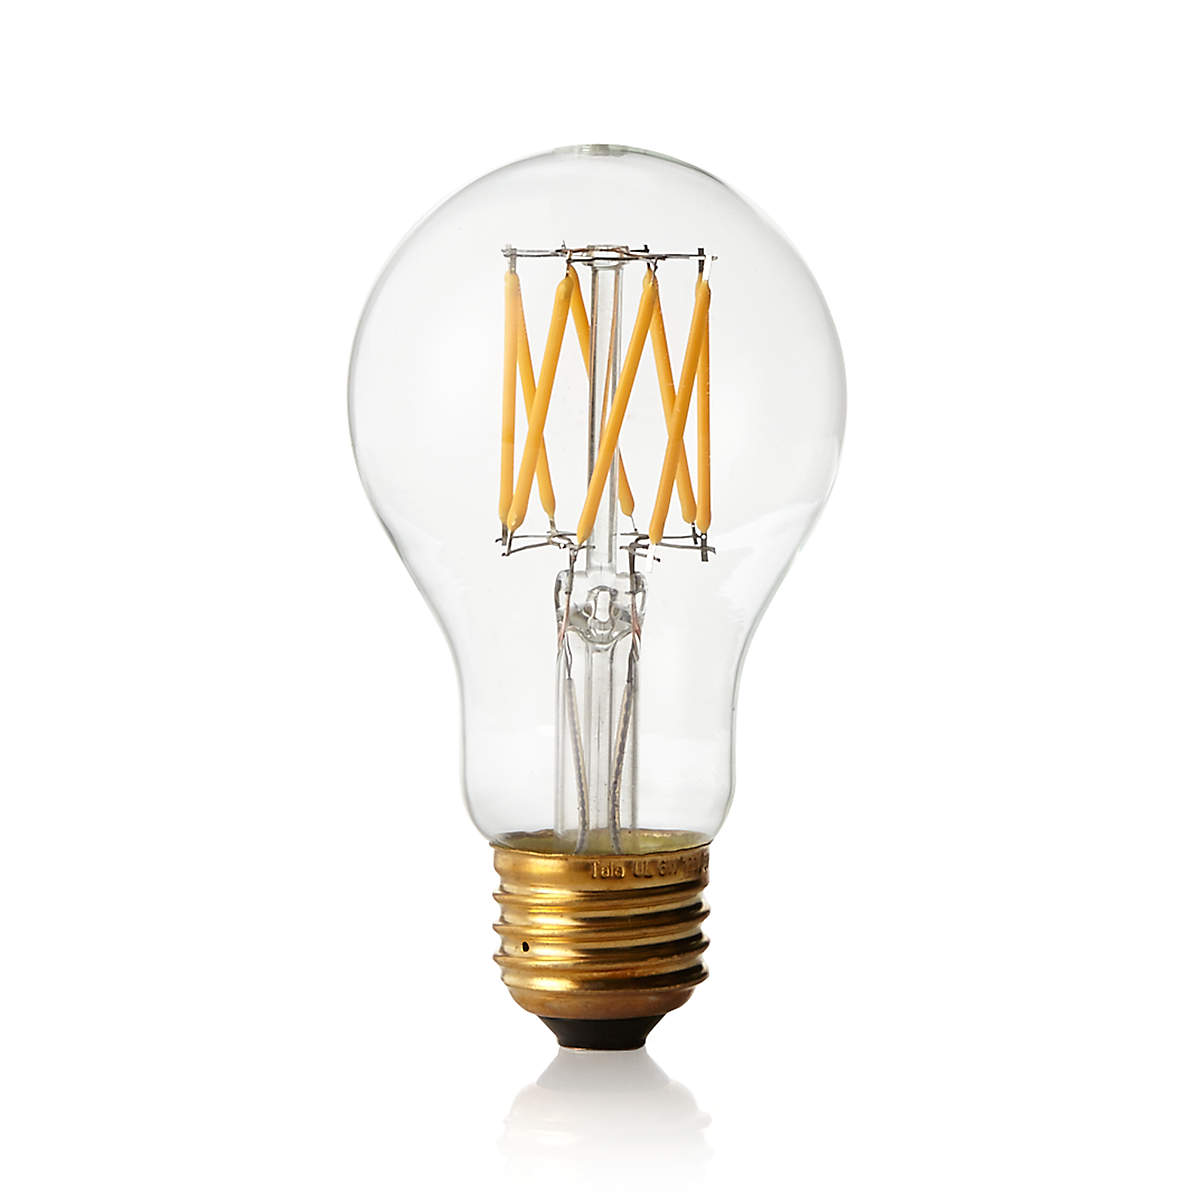 Tala Globe LED bulb 6W E27, dimmable